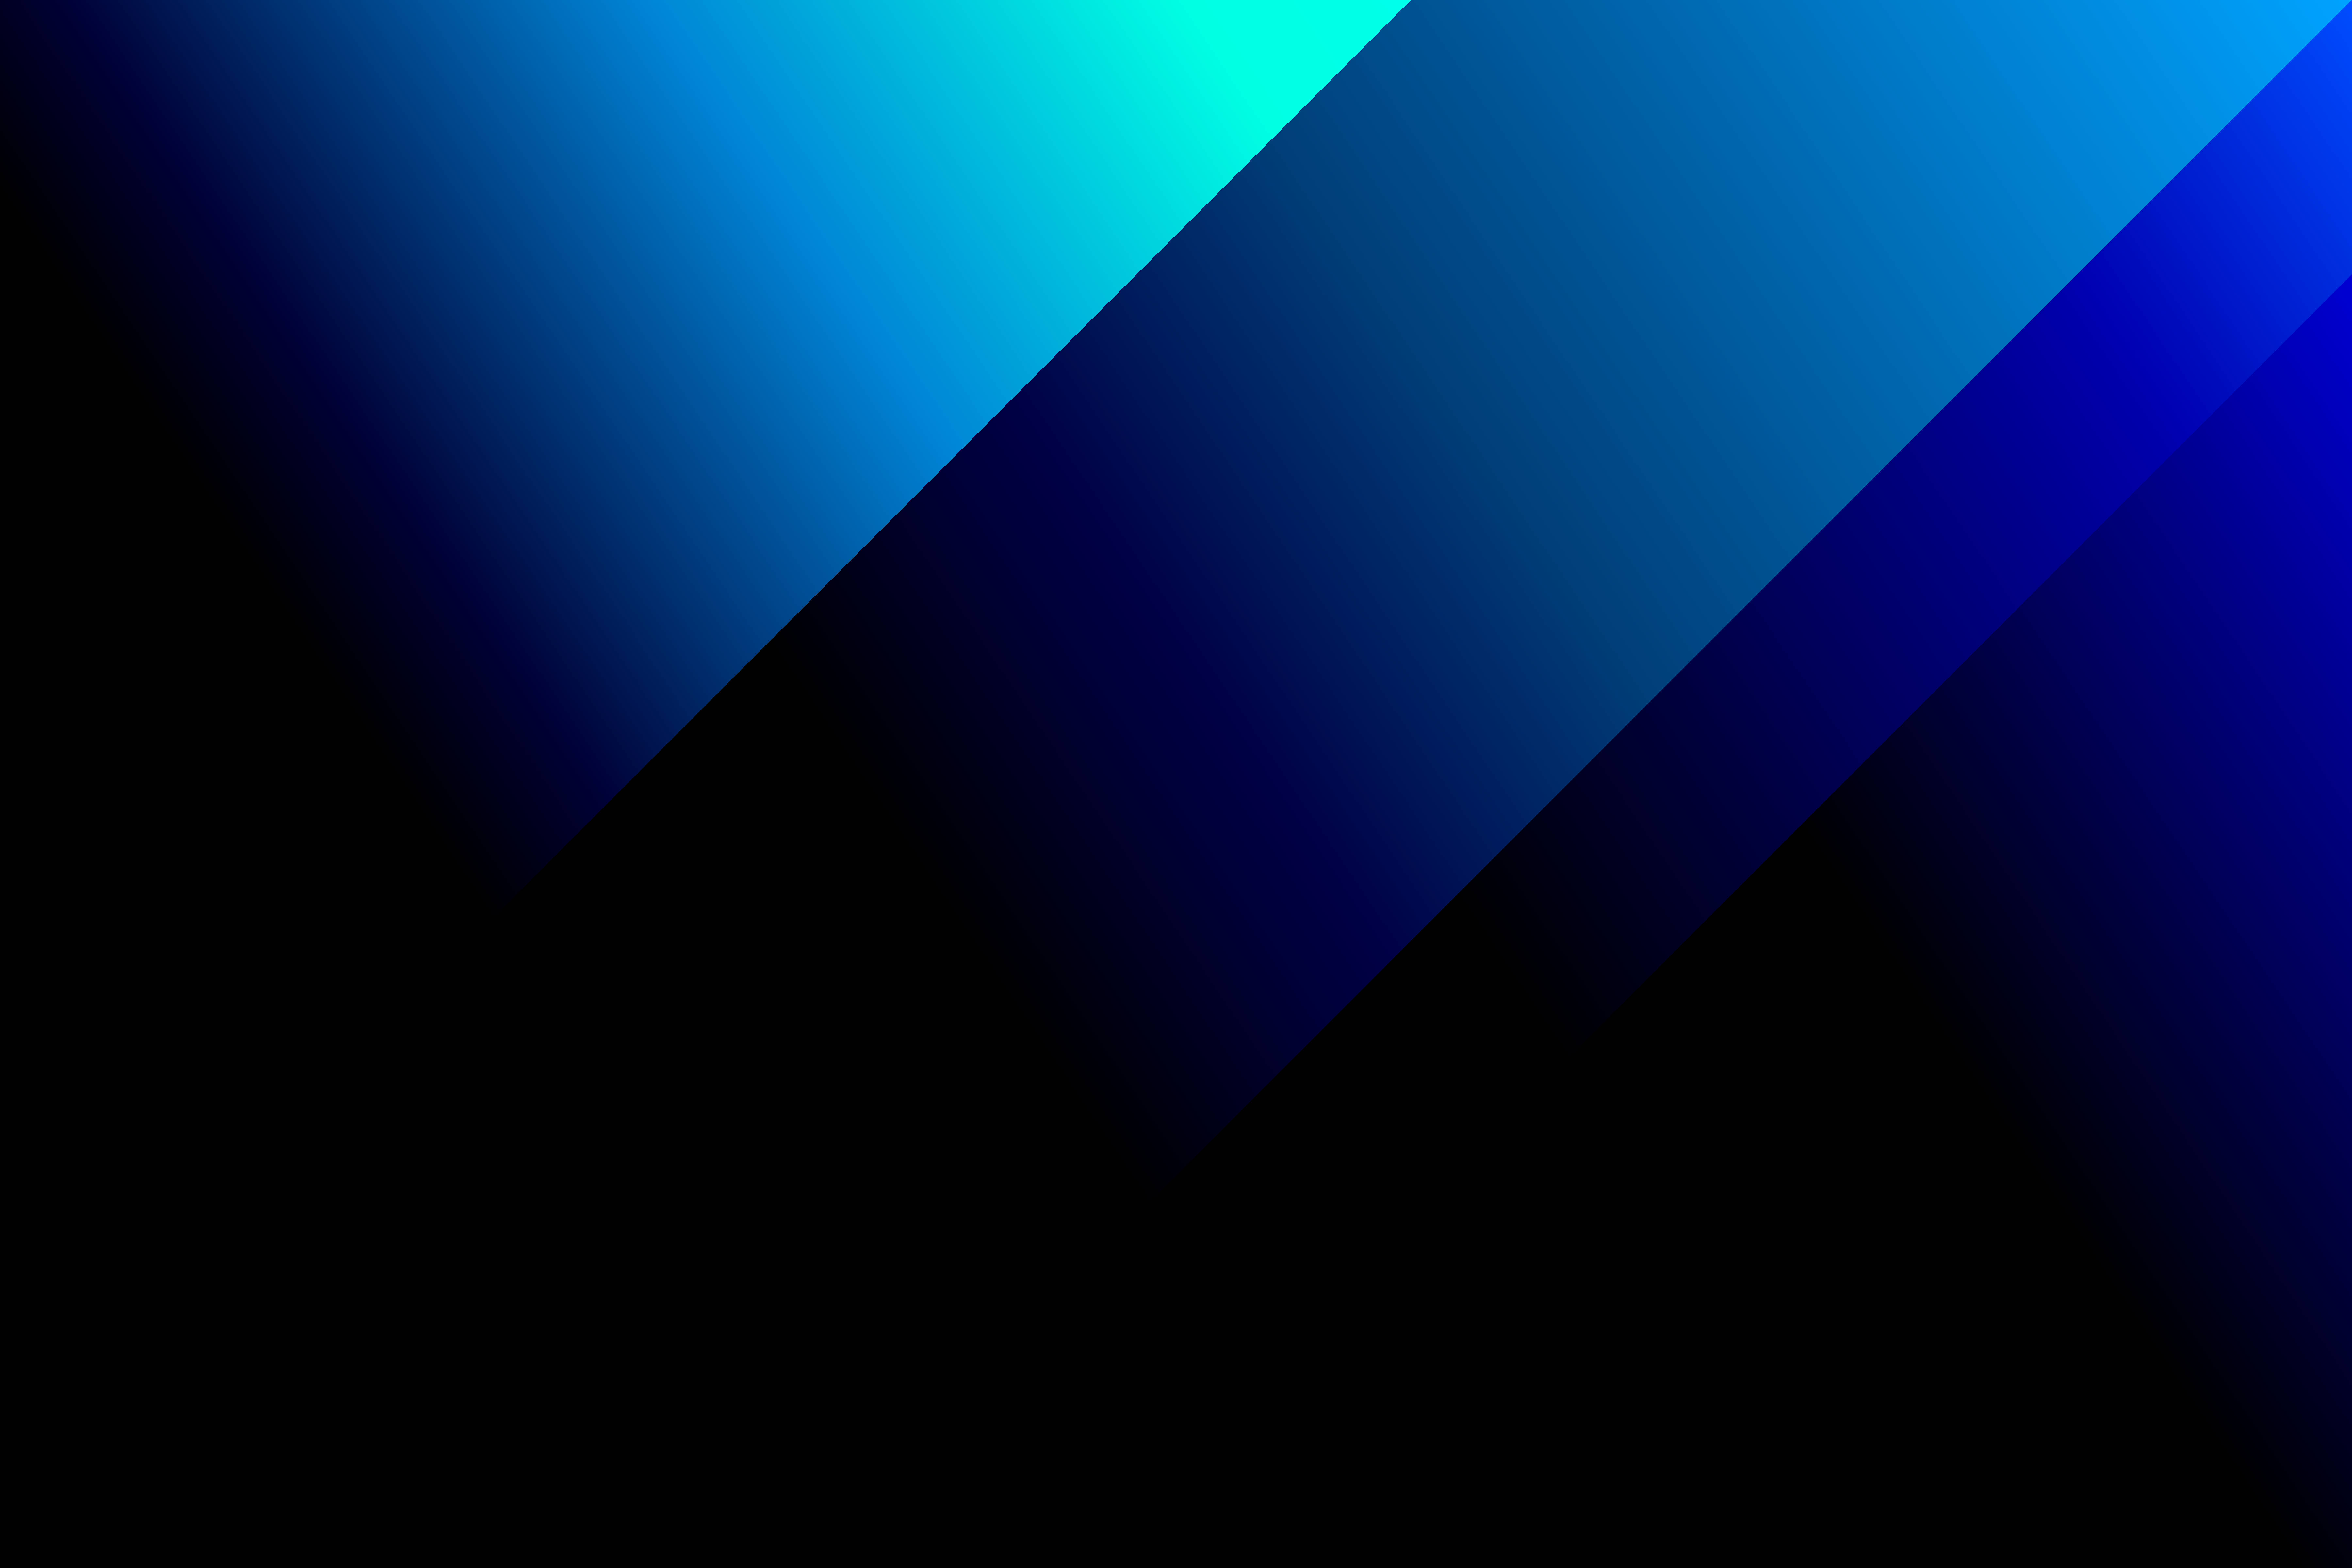 Download Solid Dark Blue And Black Vector Wallpaper